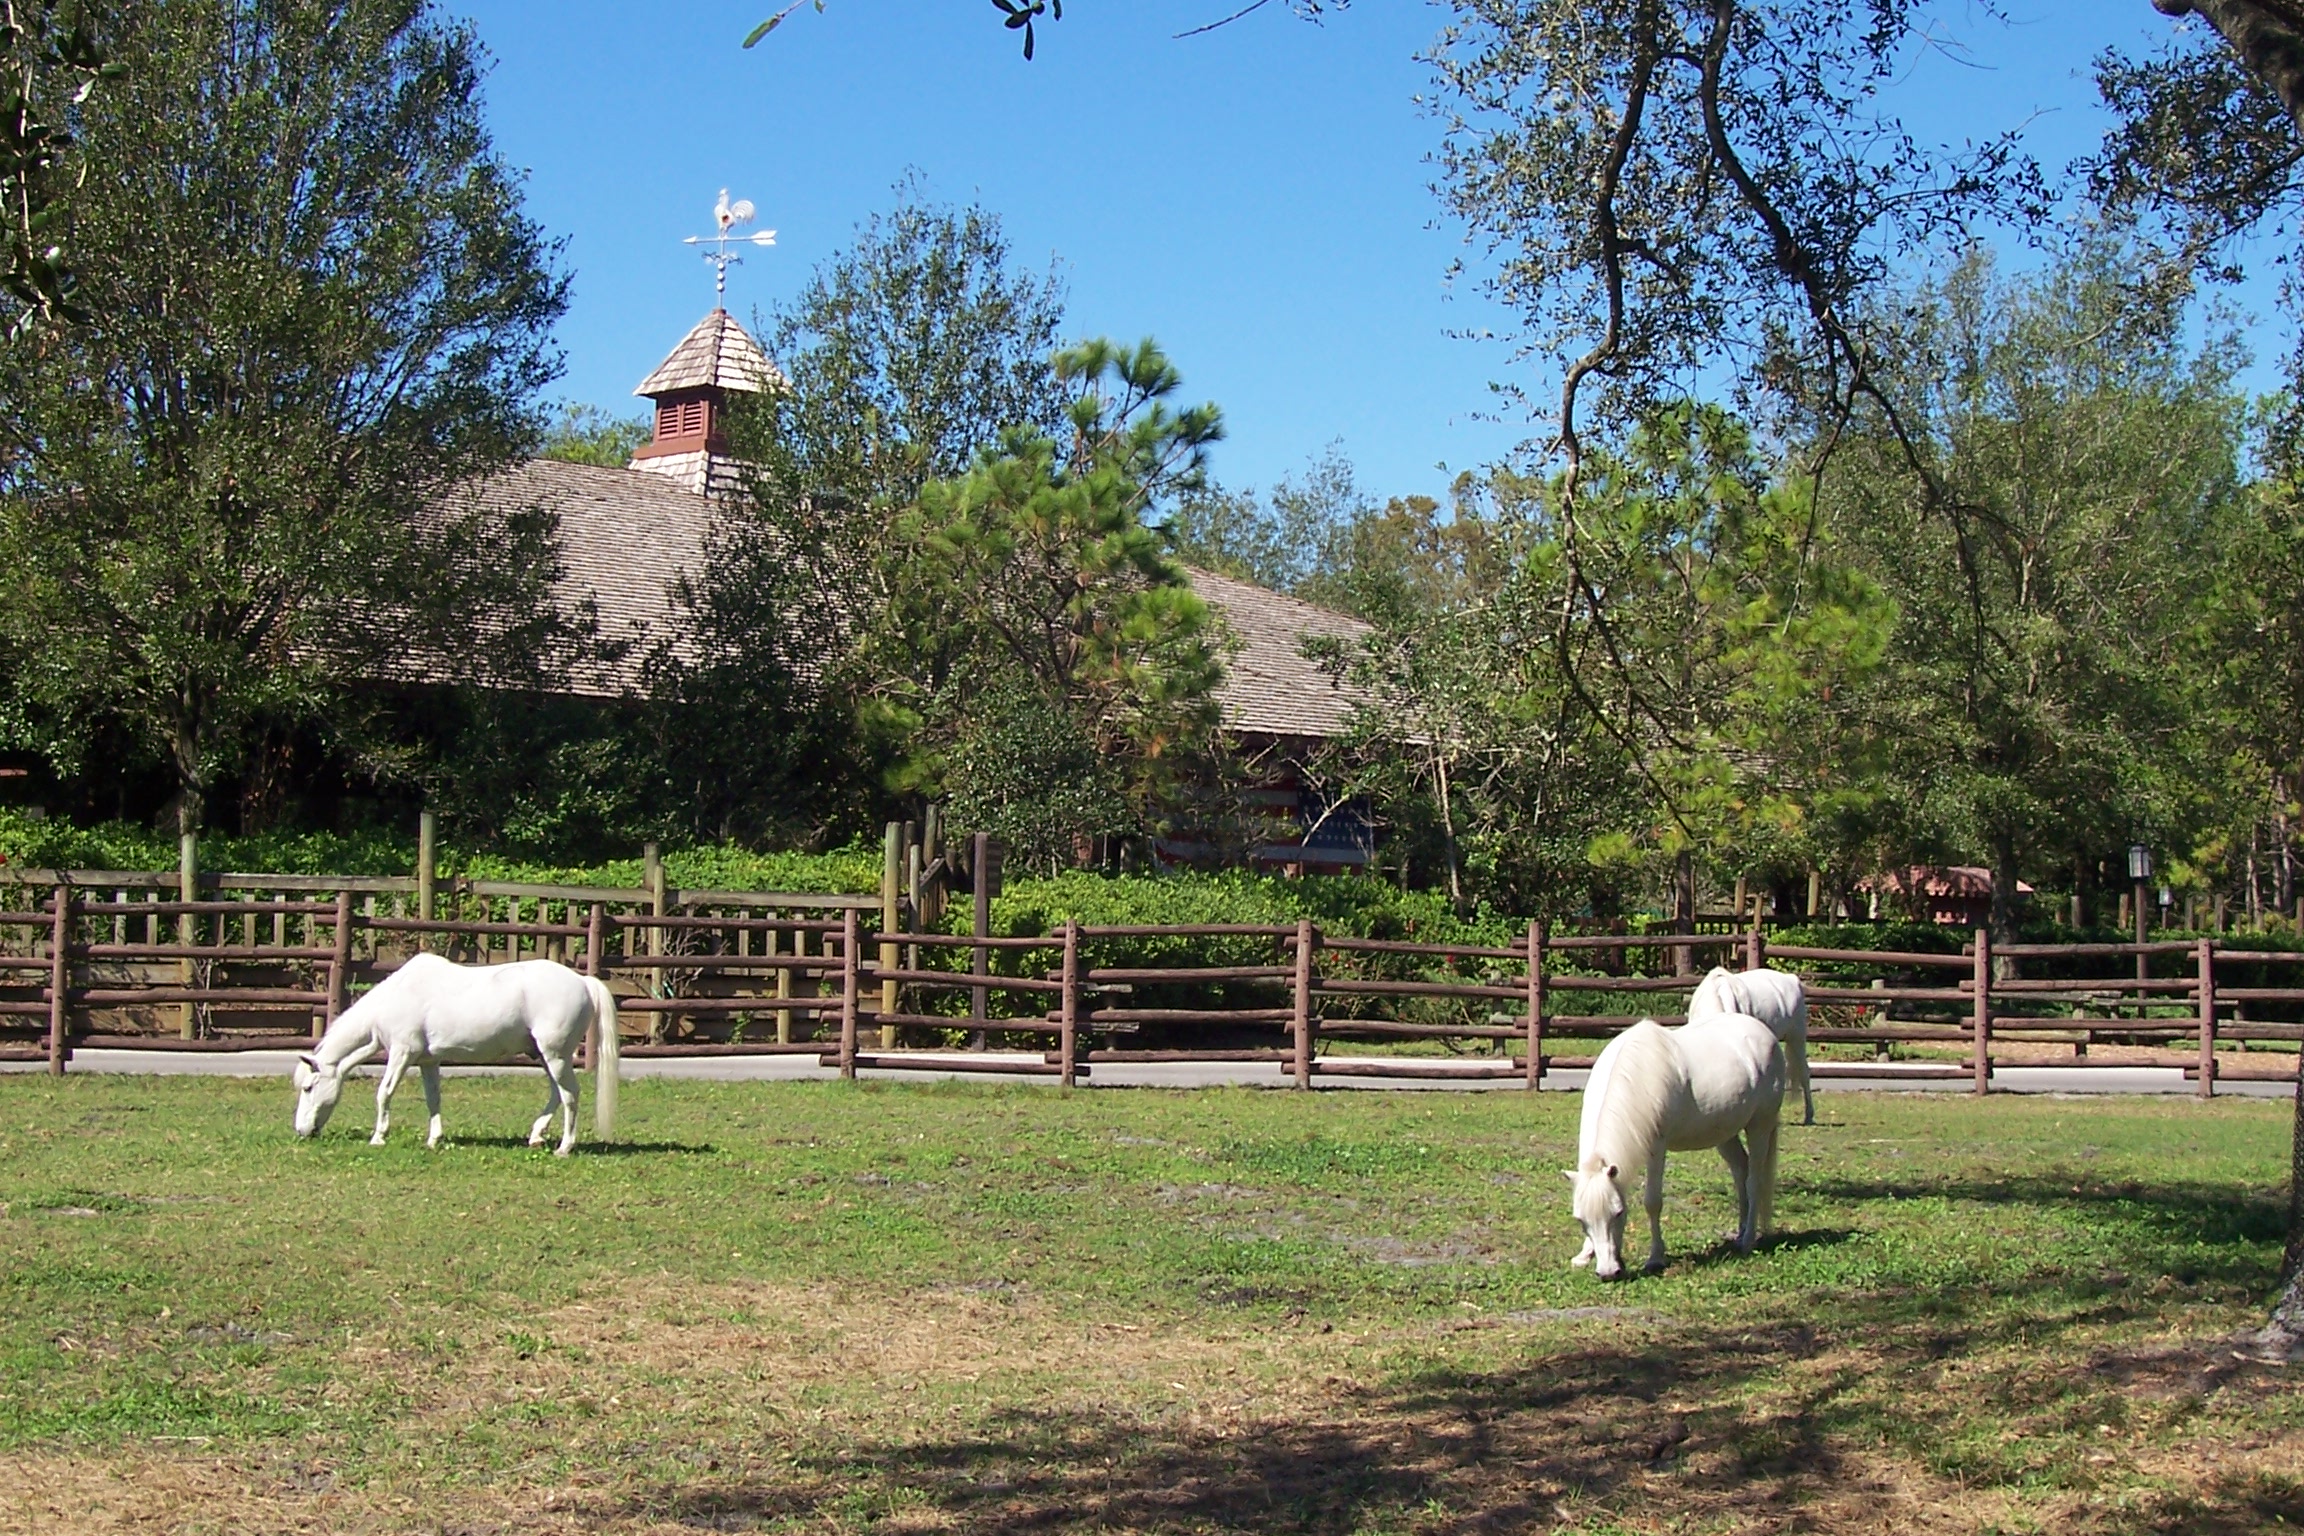 Cindy's ponies grazing.